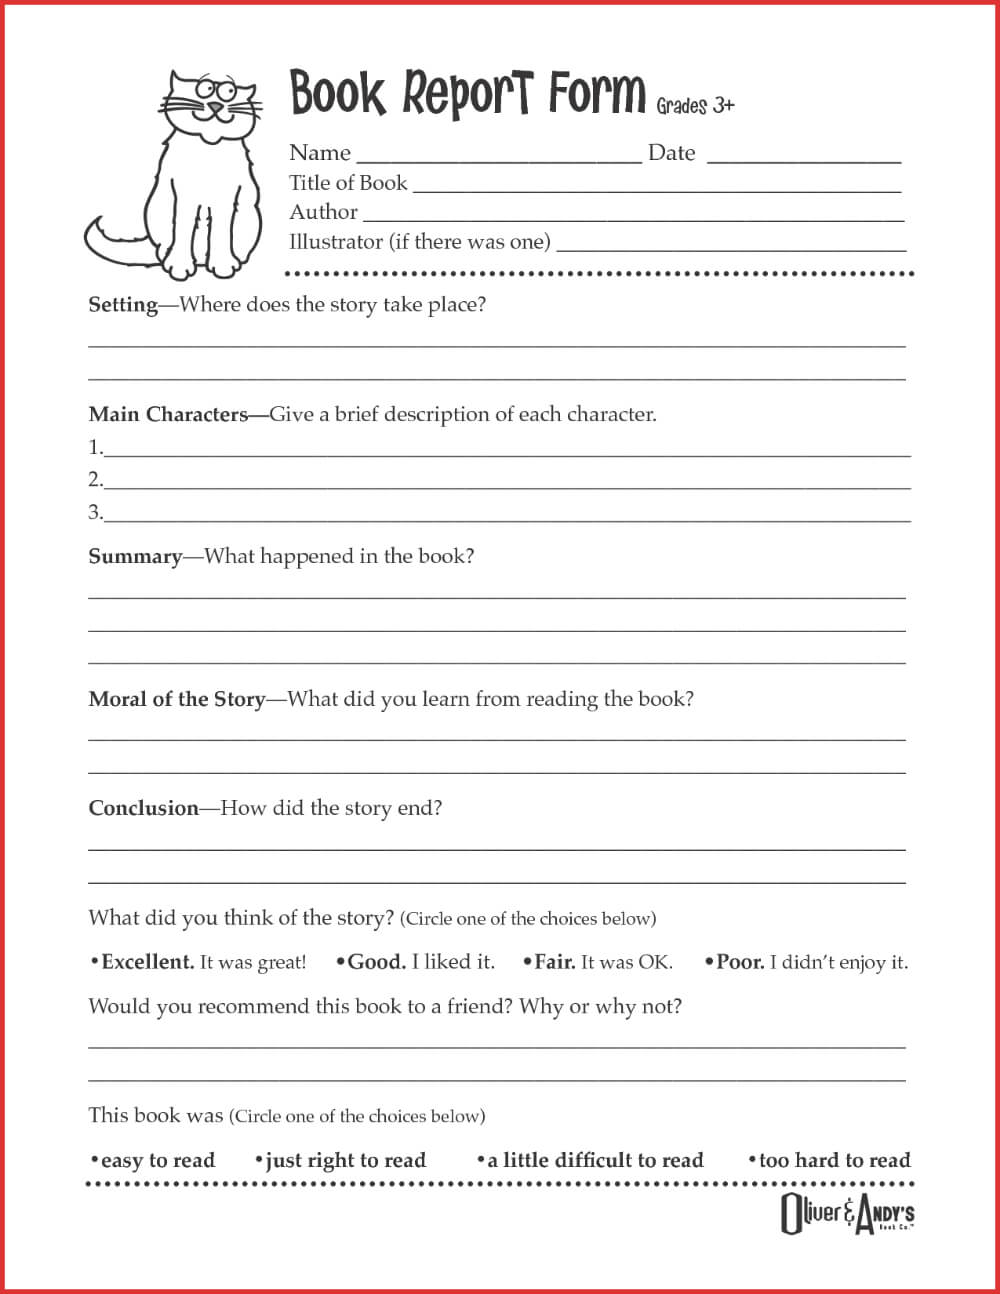 Second Grade Book Report Template Book Report Form Grades 3 Pertaining To Book Report Template Middle School